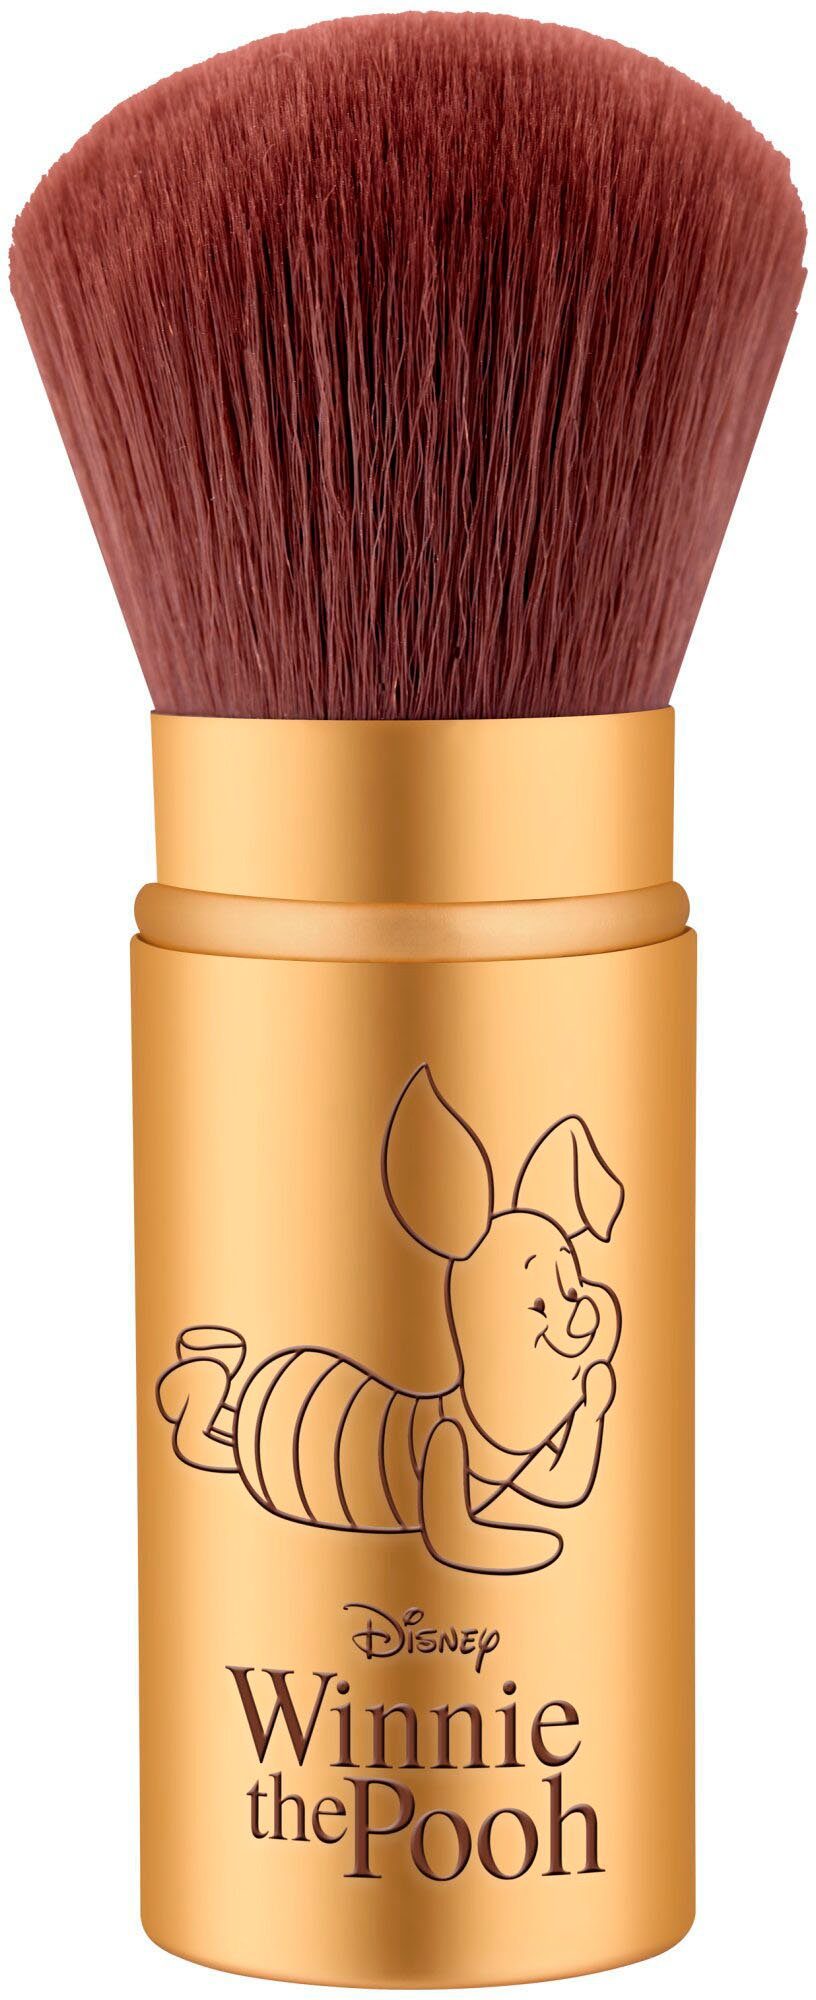 the Puderpinsel 4 Catrice Disney tlg. Pooh Winnie Brush, Kabuki